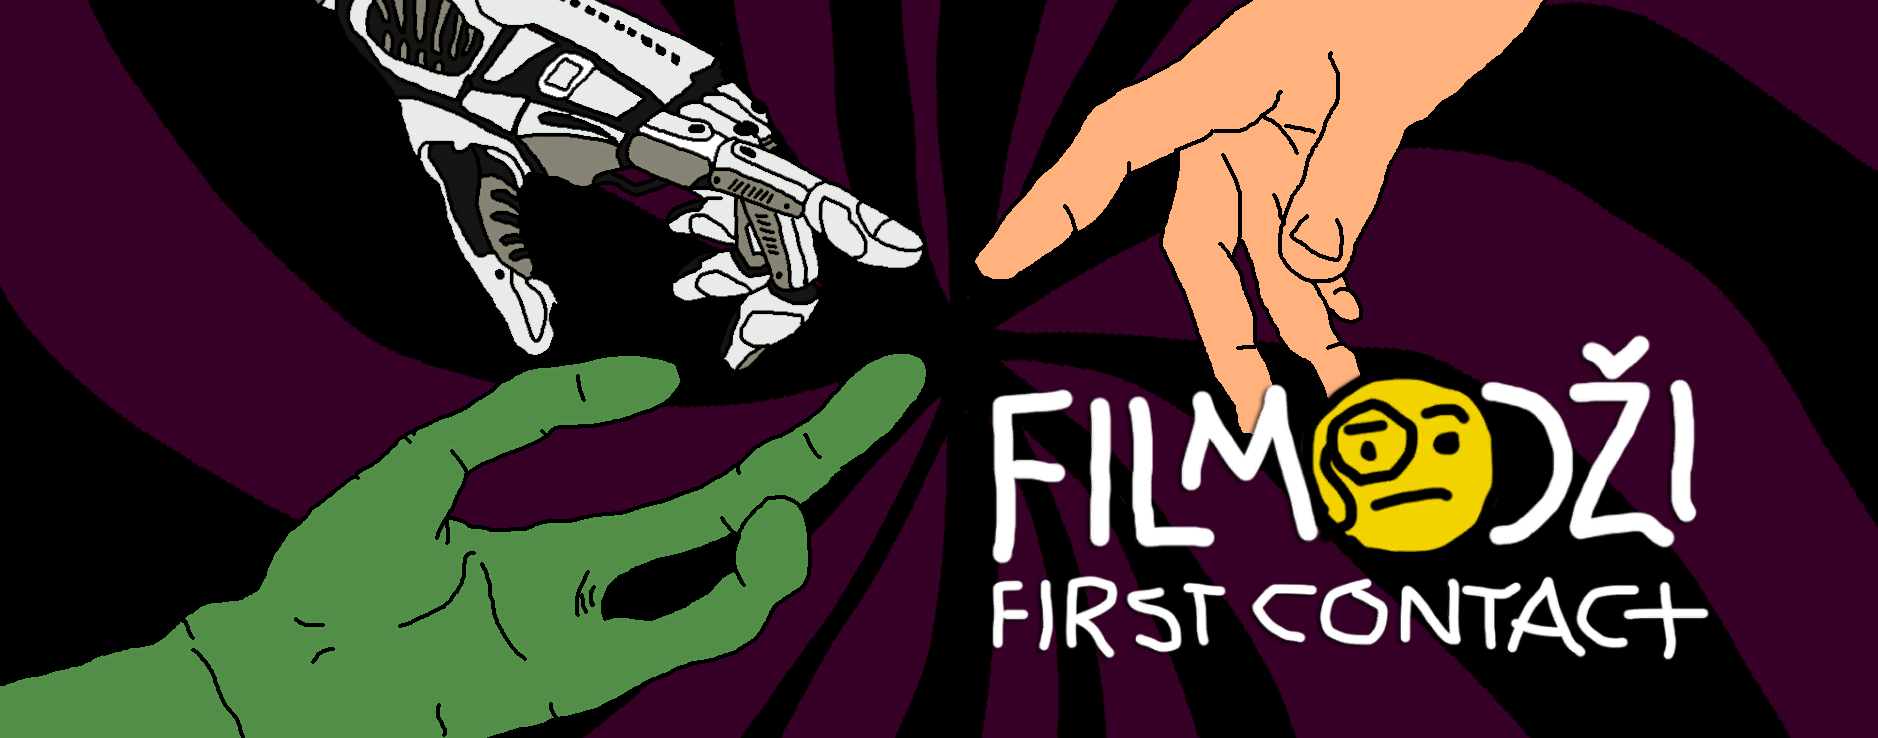 FILMODŽI: First Contact Edition